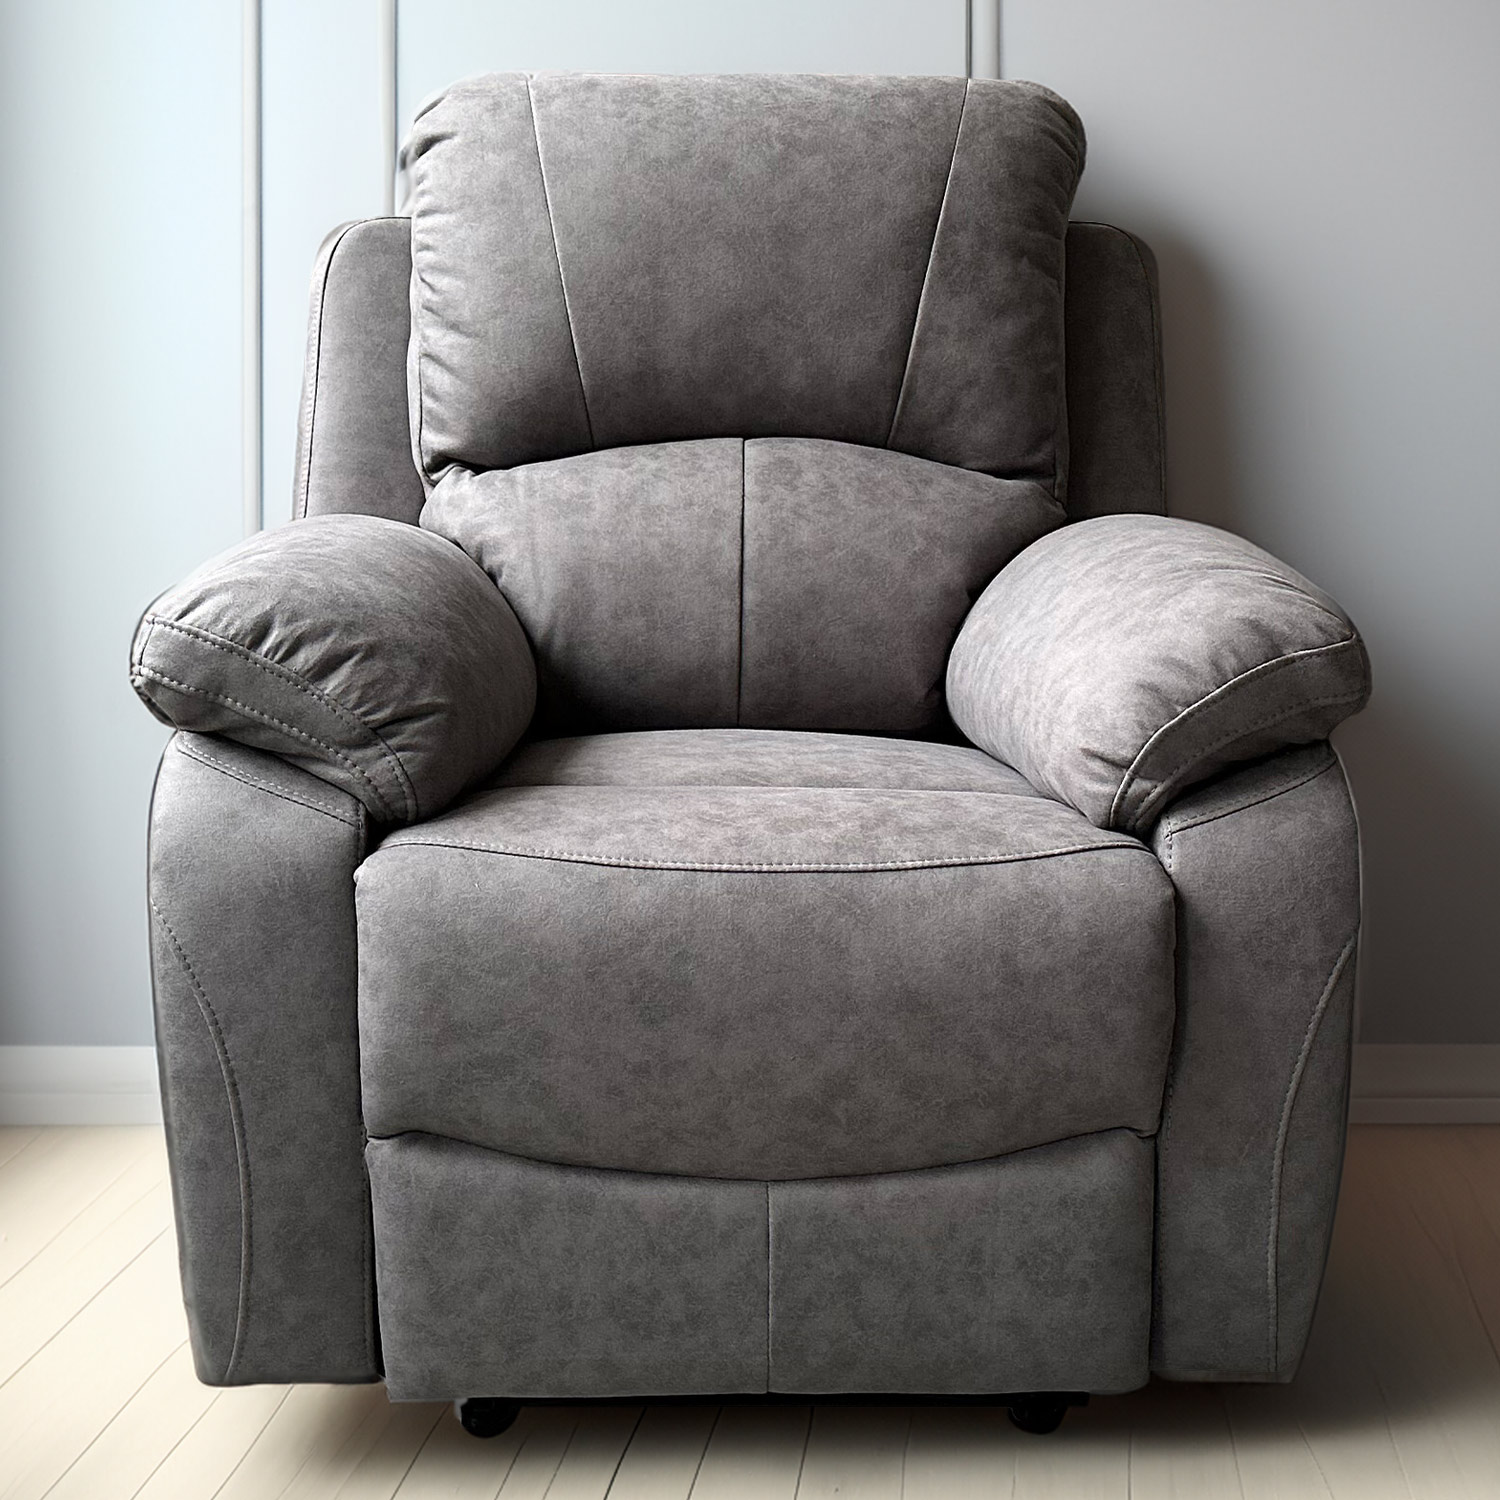 Milano Charcoal Grey Fabric Manual Recliner Chair Image 1